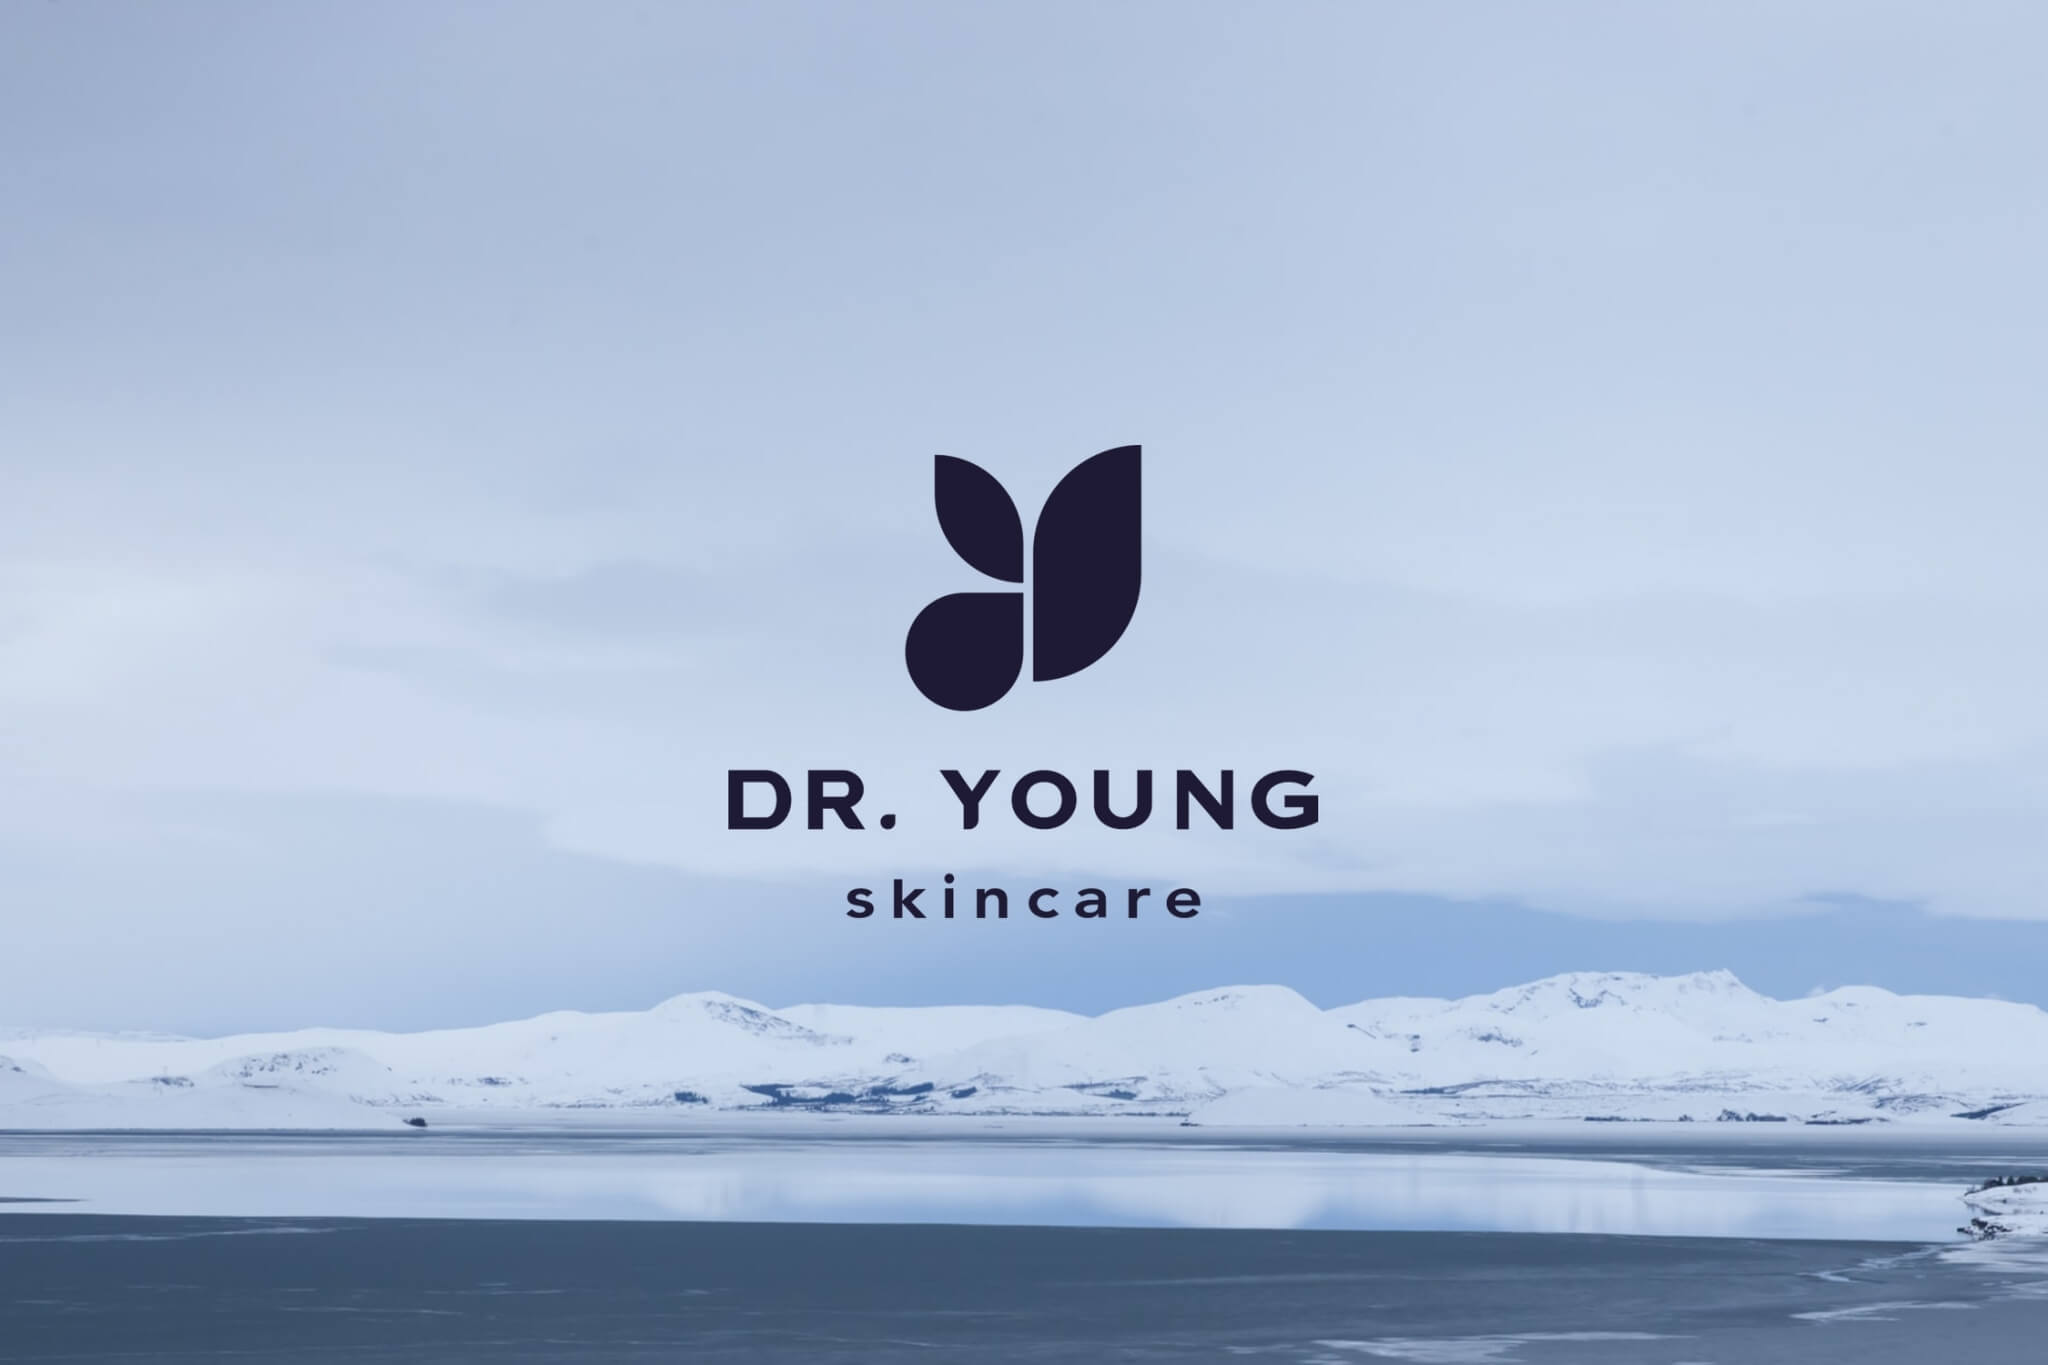 Dr. Young 品牌識別設計